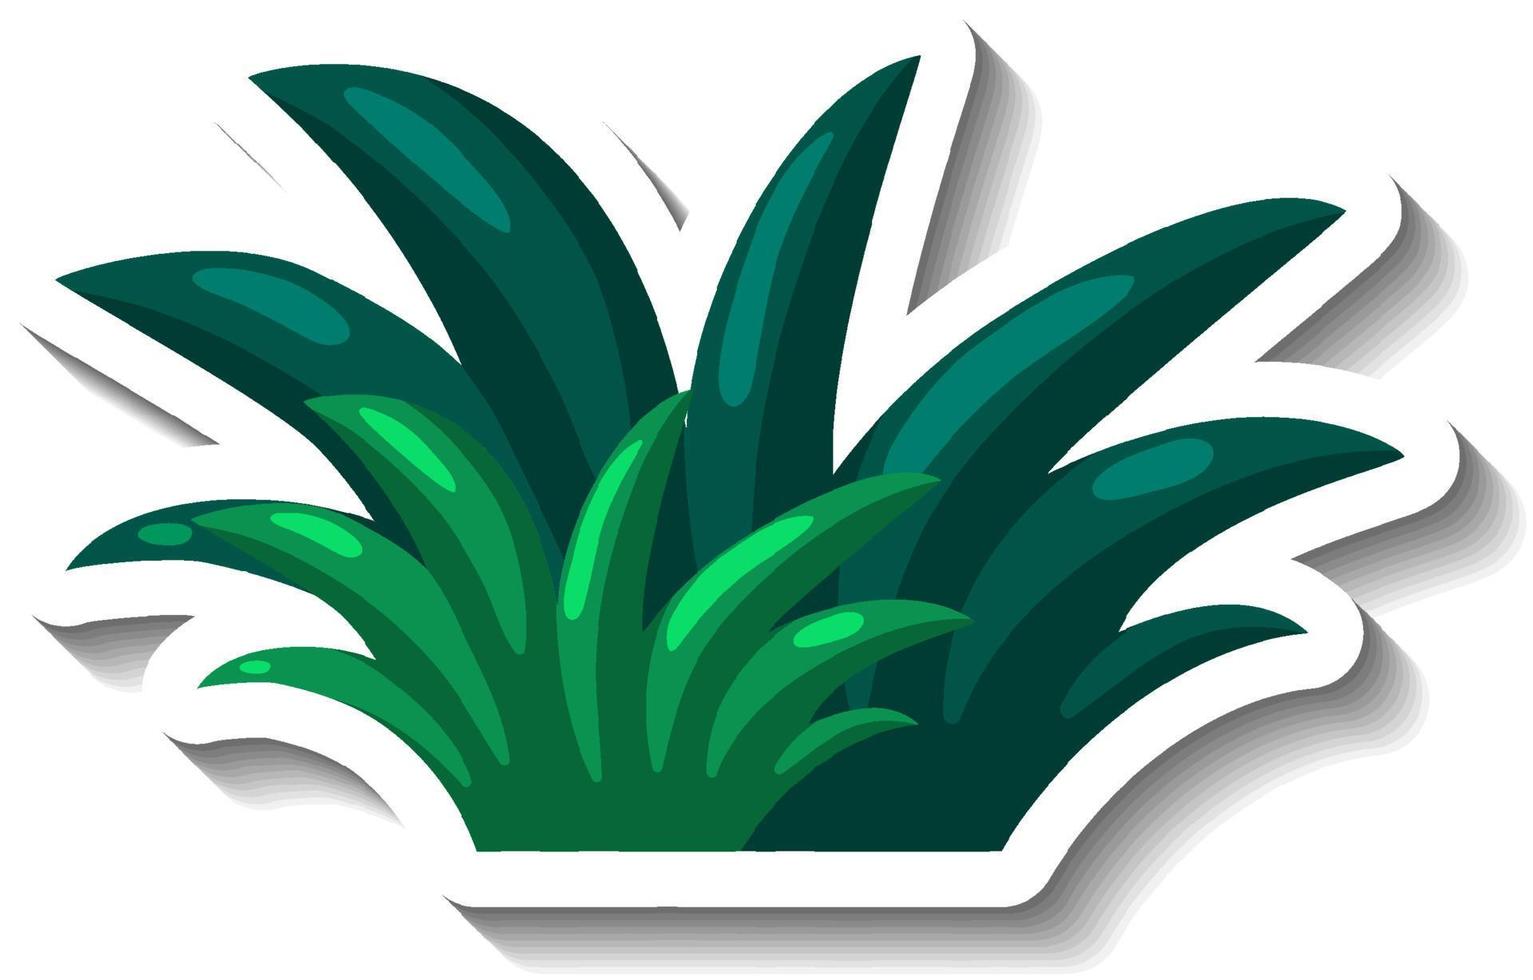 A green grass in cartoon style vector